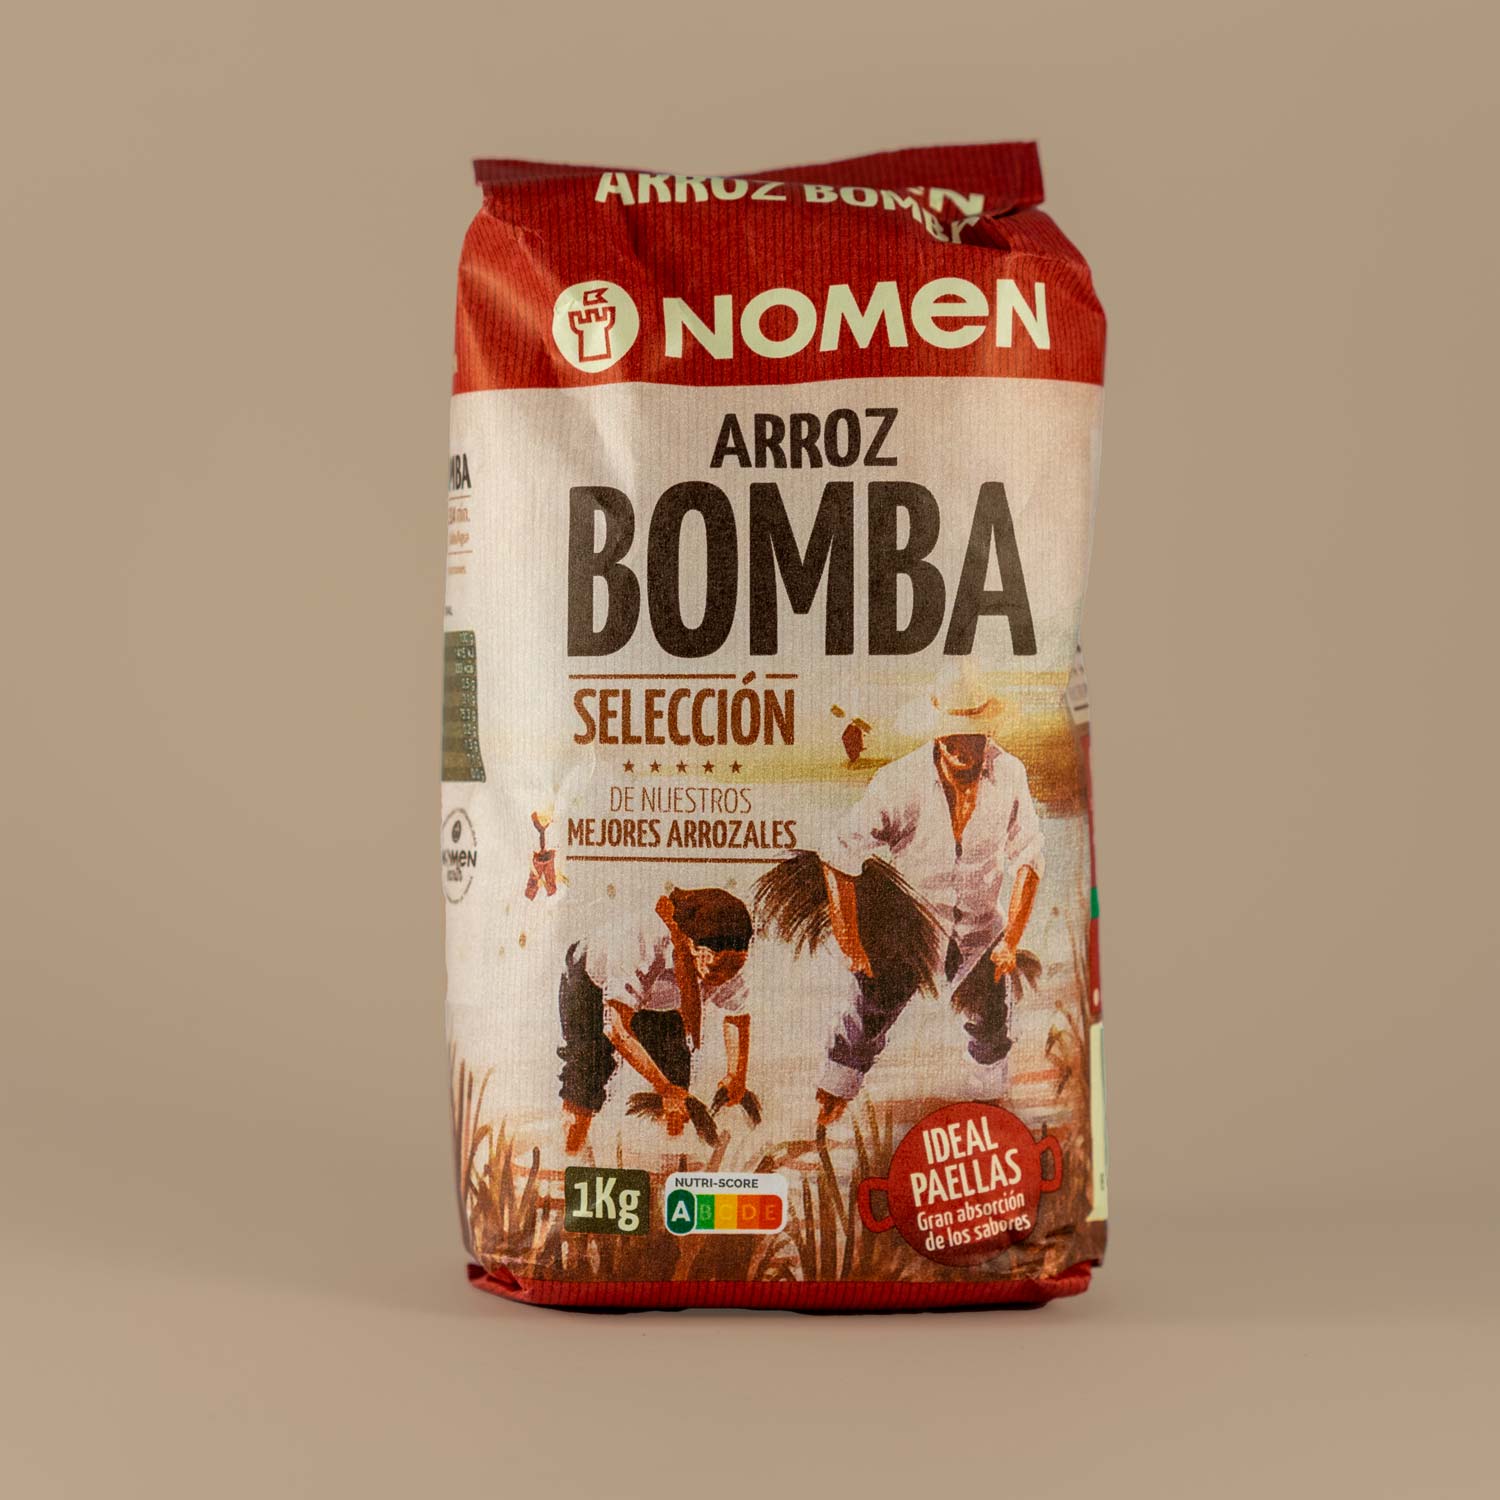 Bomba Reis »Arroz Bomba« für Paella